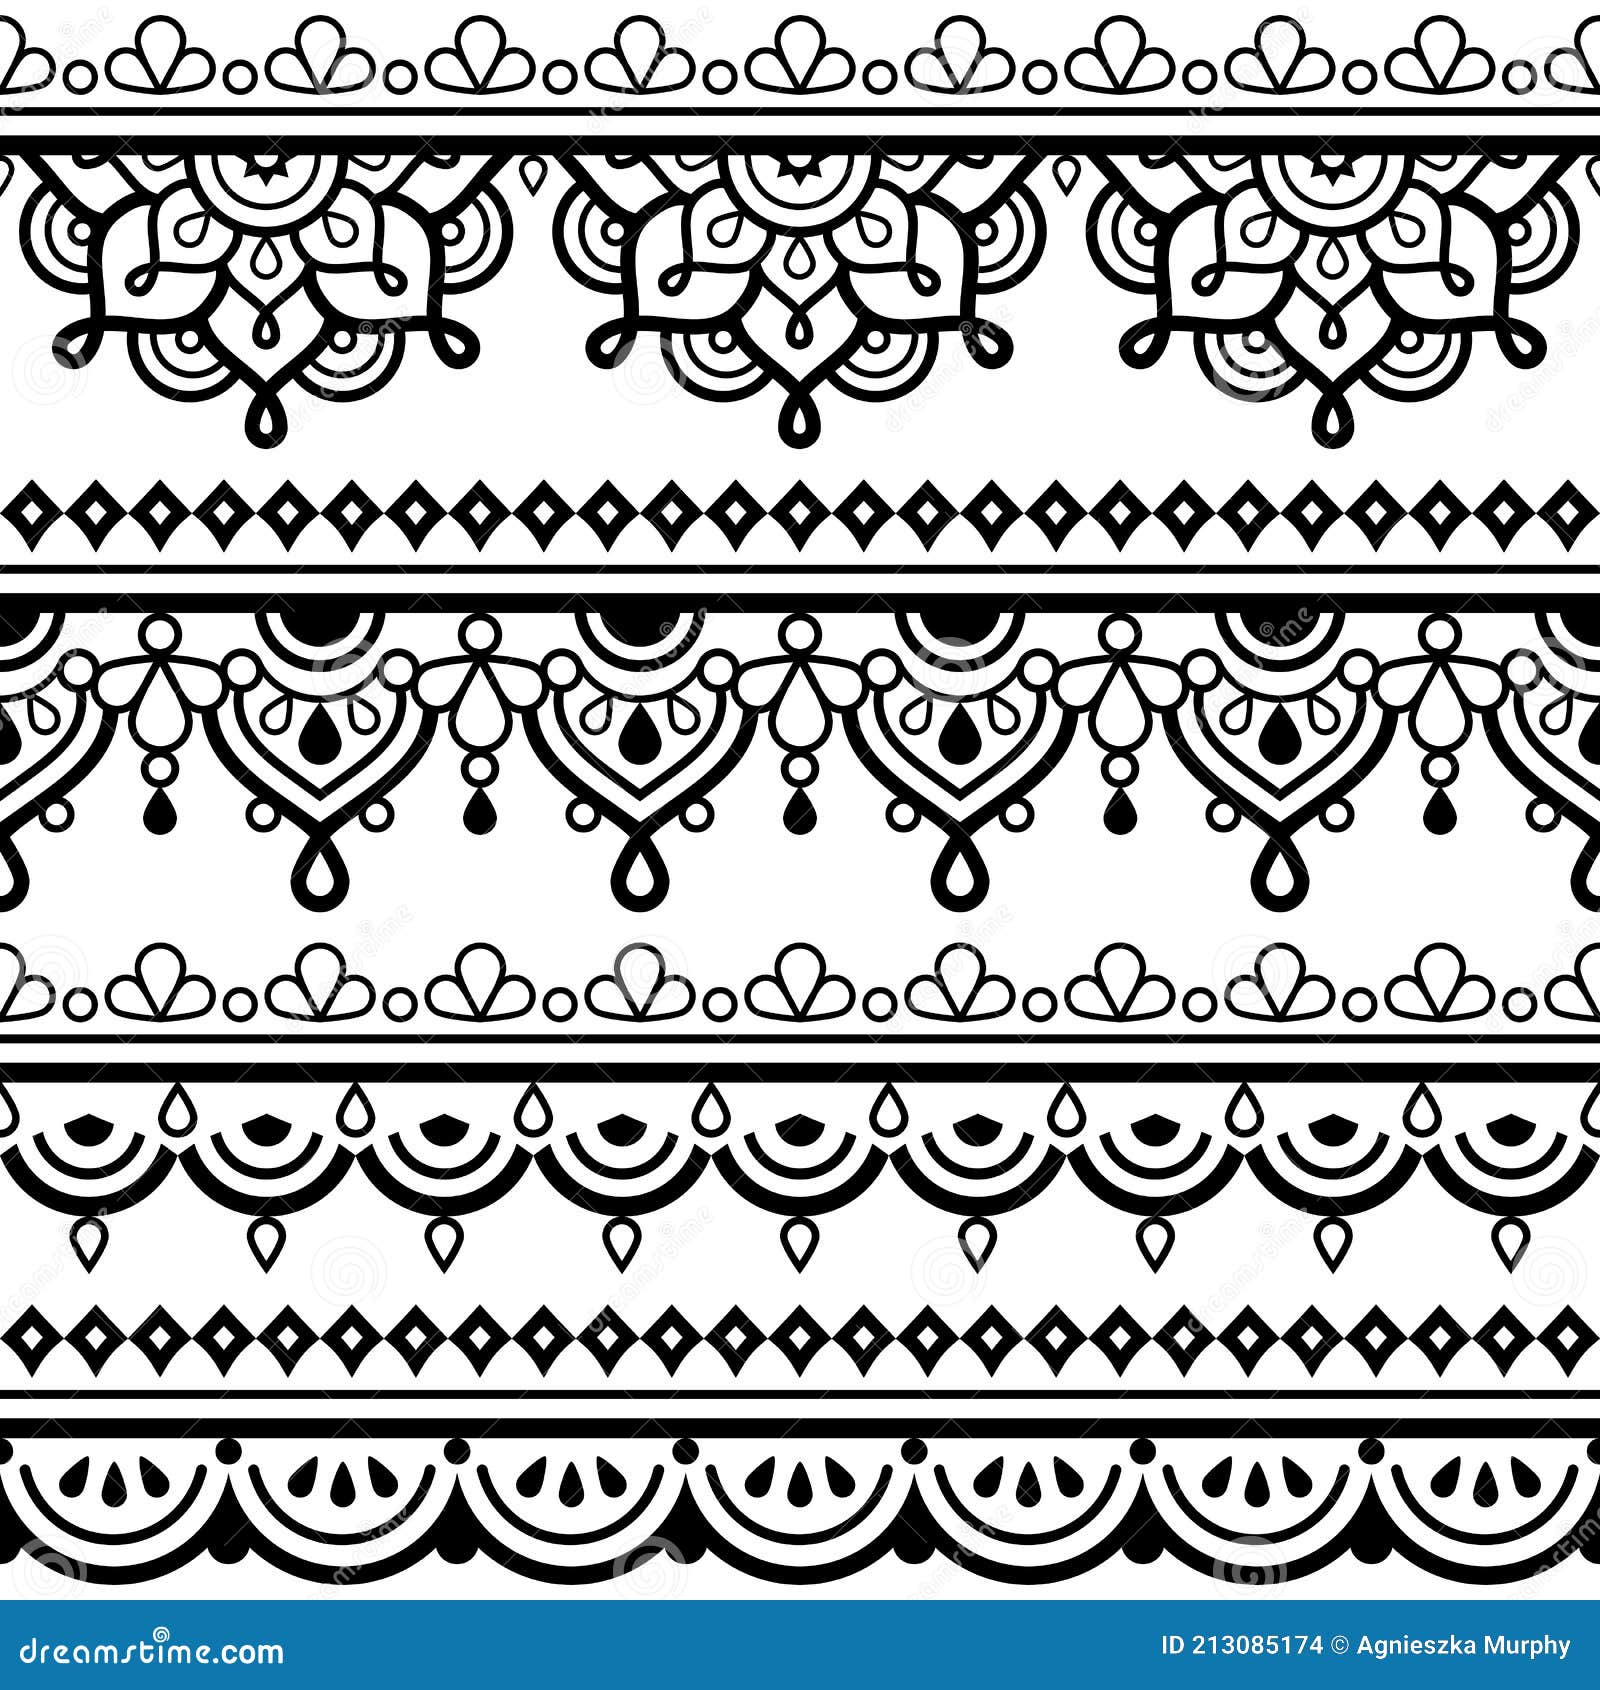 Mehndi - Indian Henna Tattoo Style Vector Seamless Pattern with Mandalas -  Textile or Fabric Print Design Stock Vector - Illustration of monochrome,  bohemian: 213085174